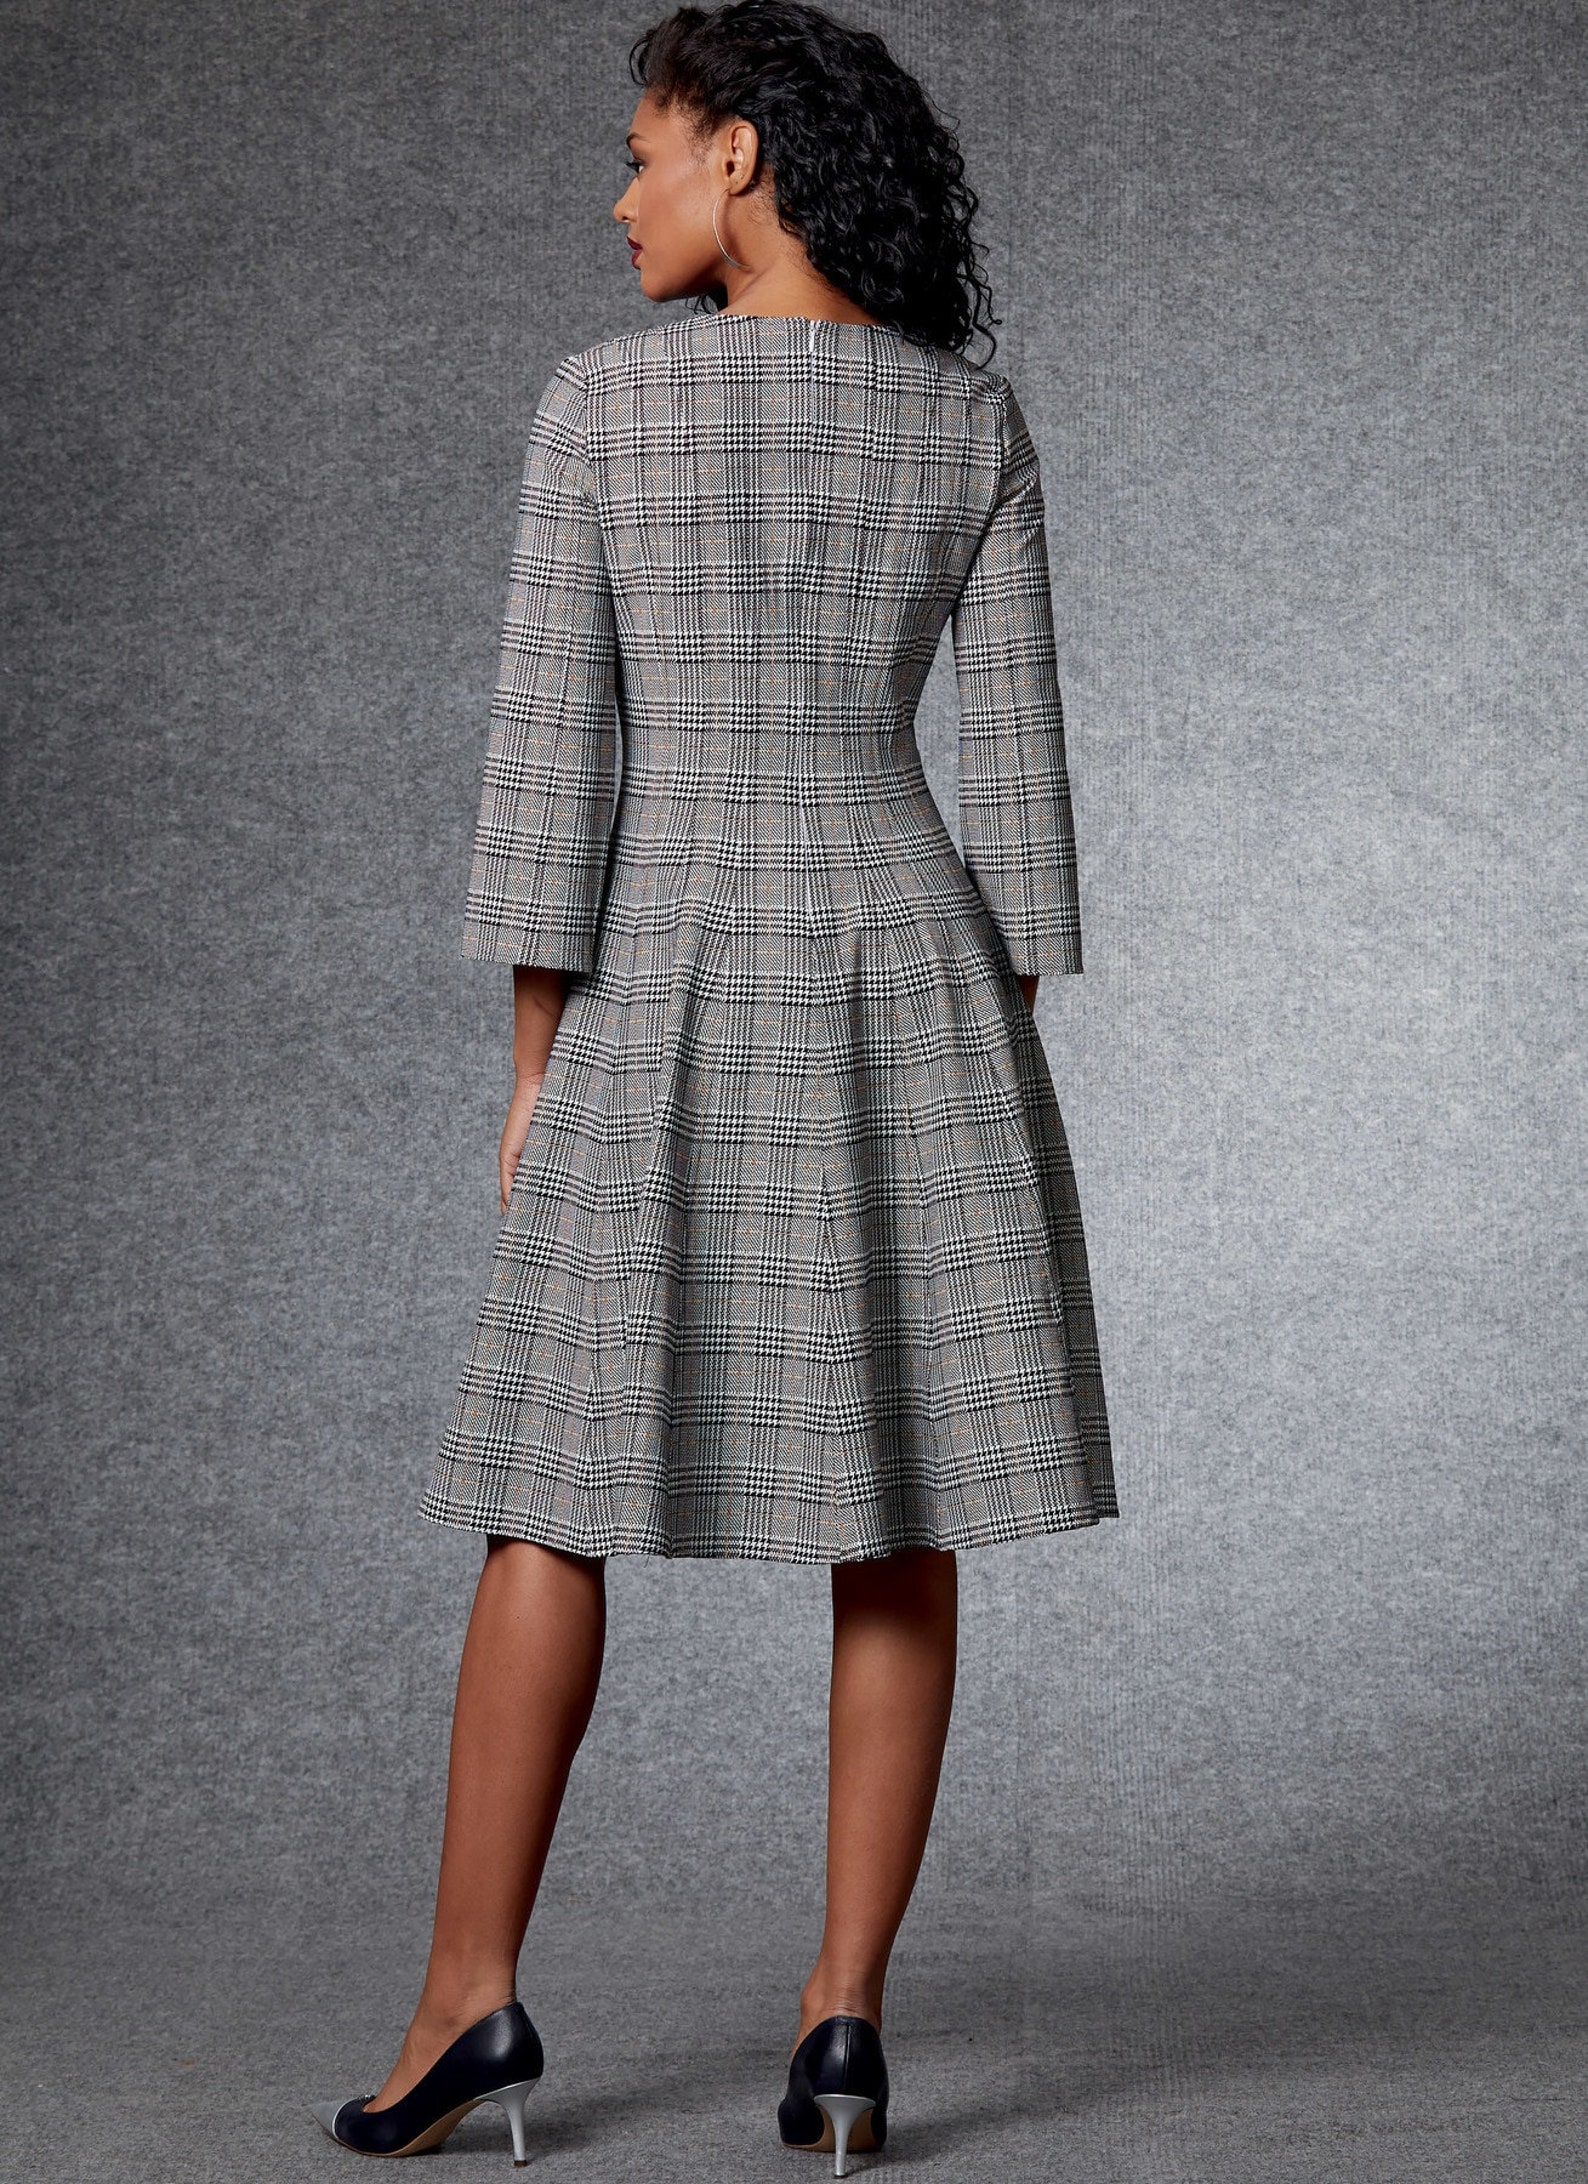 Vogue Sewing Pattern for Women's Dress Princess Seam - Etsy